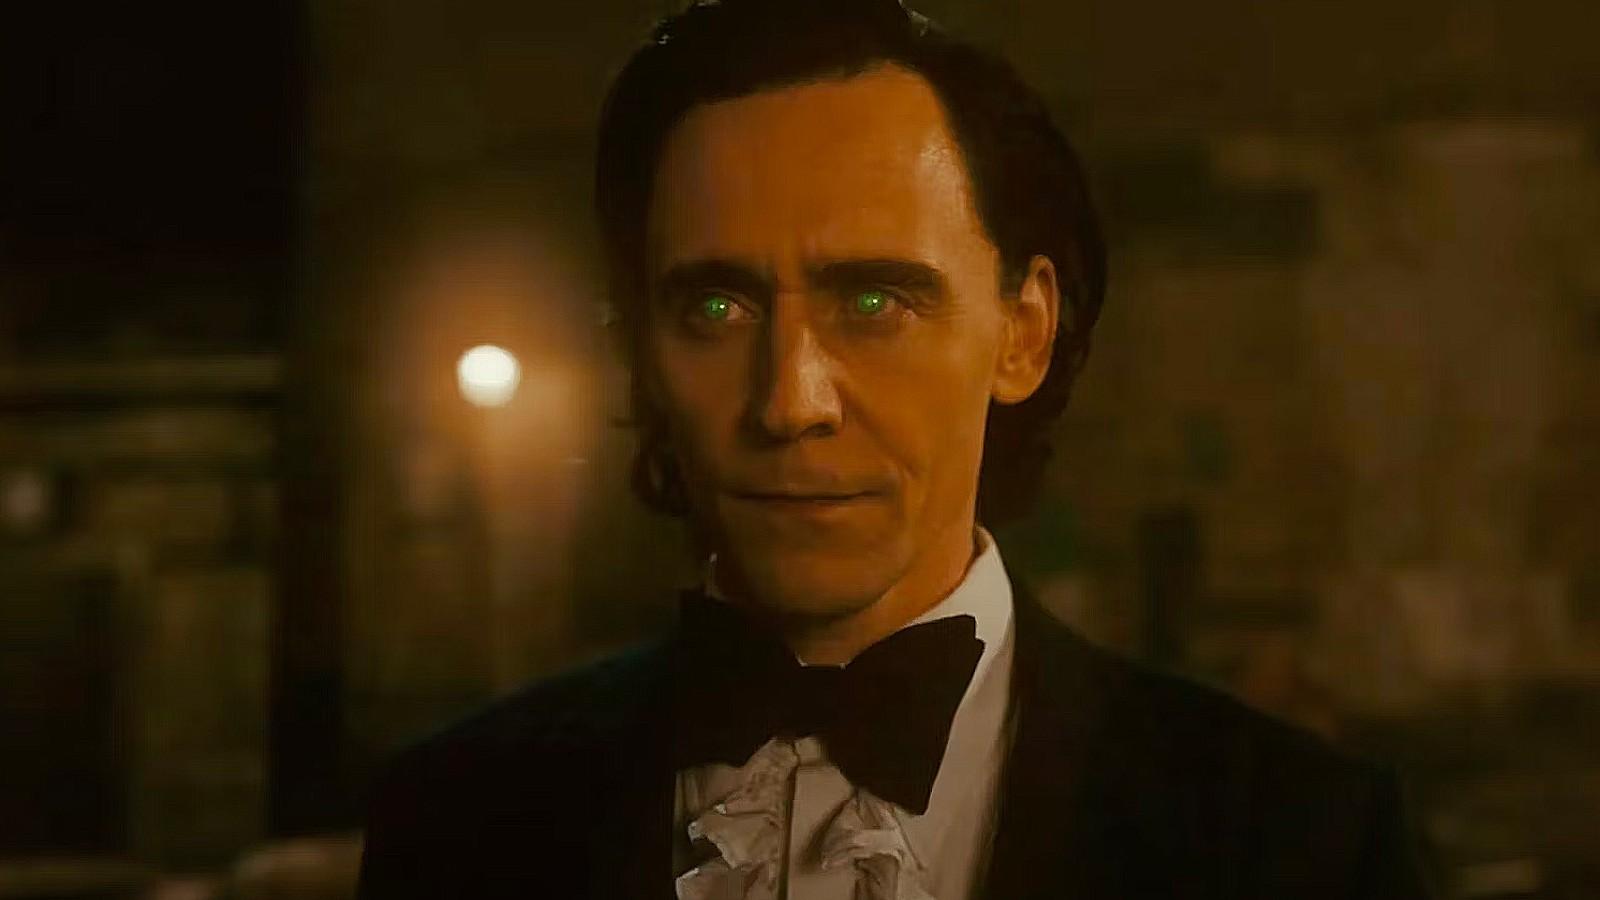 Loki Season 2 Episode 5 review: Even gods deserve second chances - Dexerto